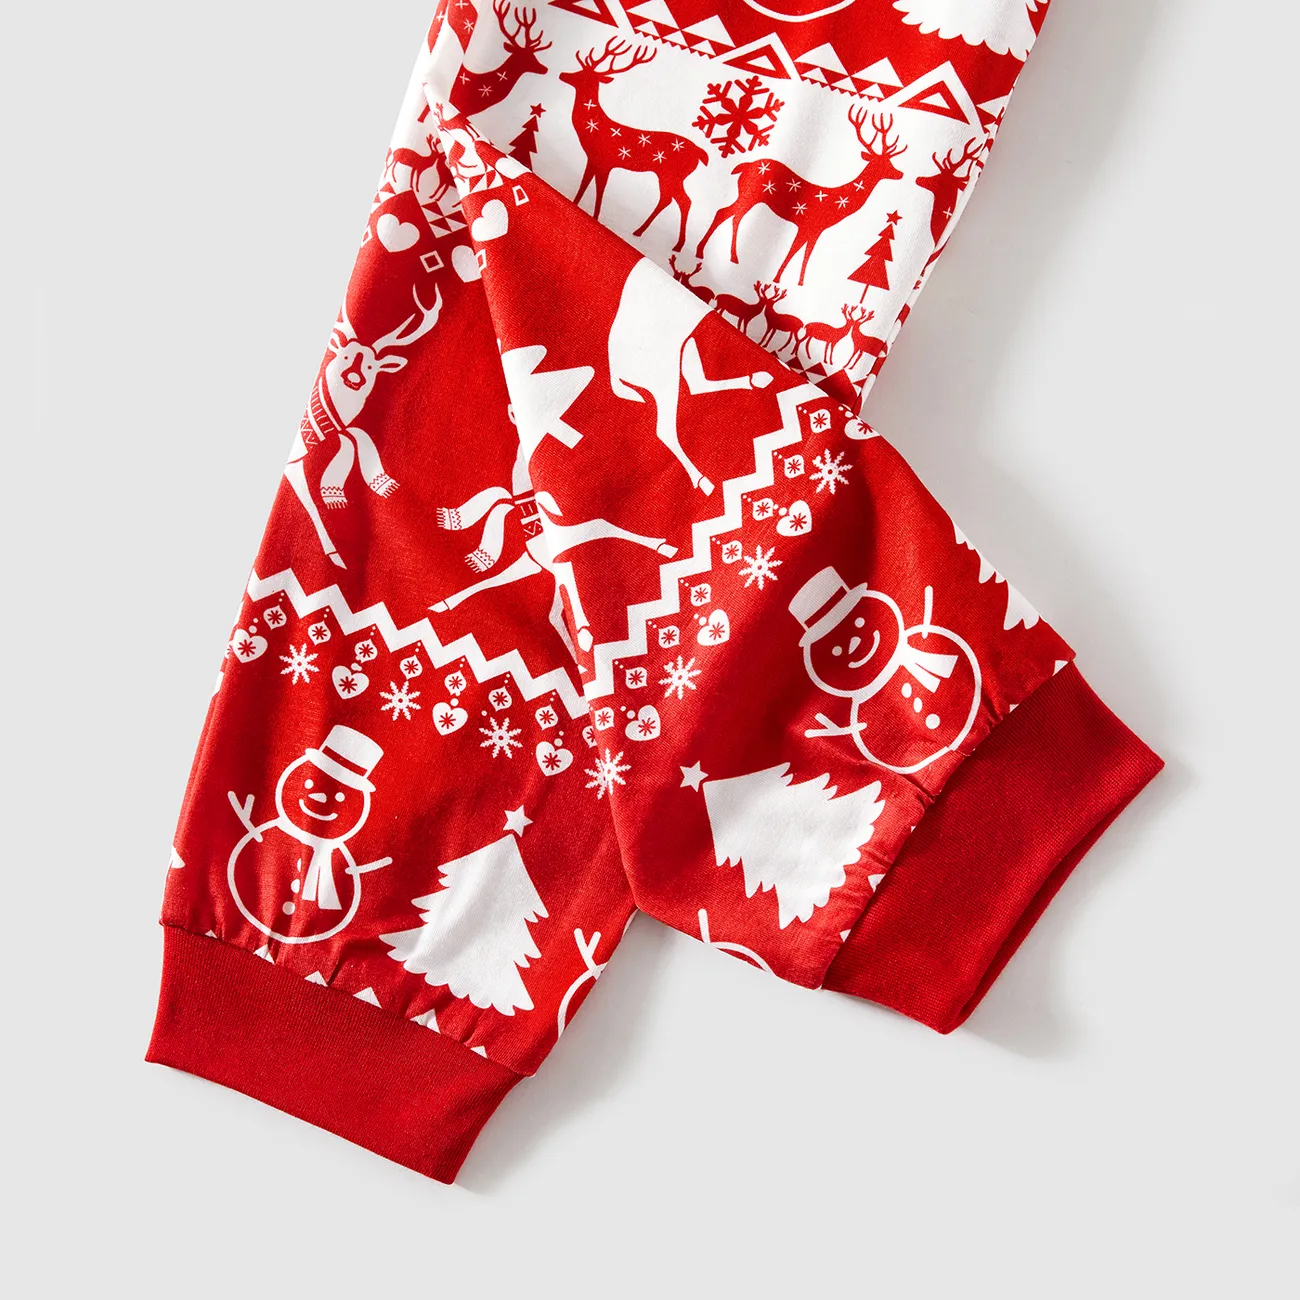 Noël Look Familial Manches longues Tenues de famille assorties Pyjamas (Flame Resistant) rouge blanc big image 1